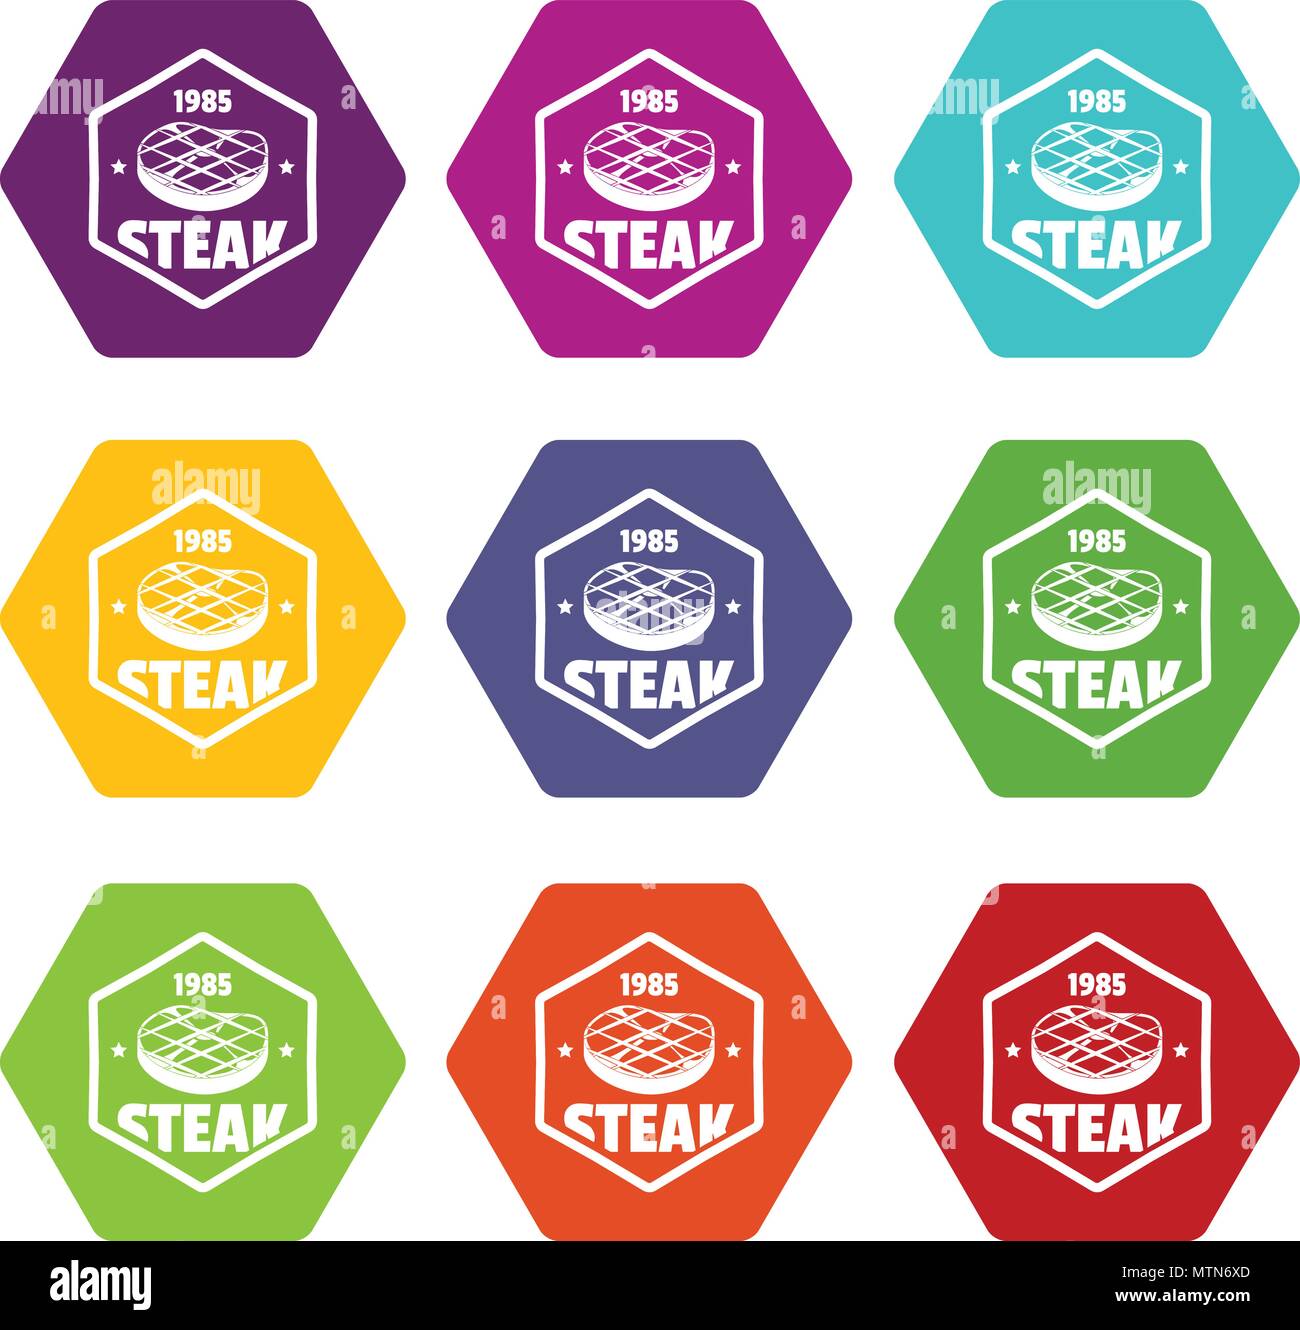 1985 steak icons set 9 vector Stock Vector